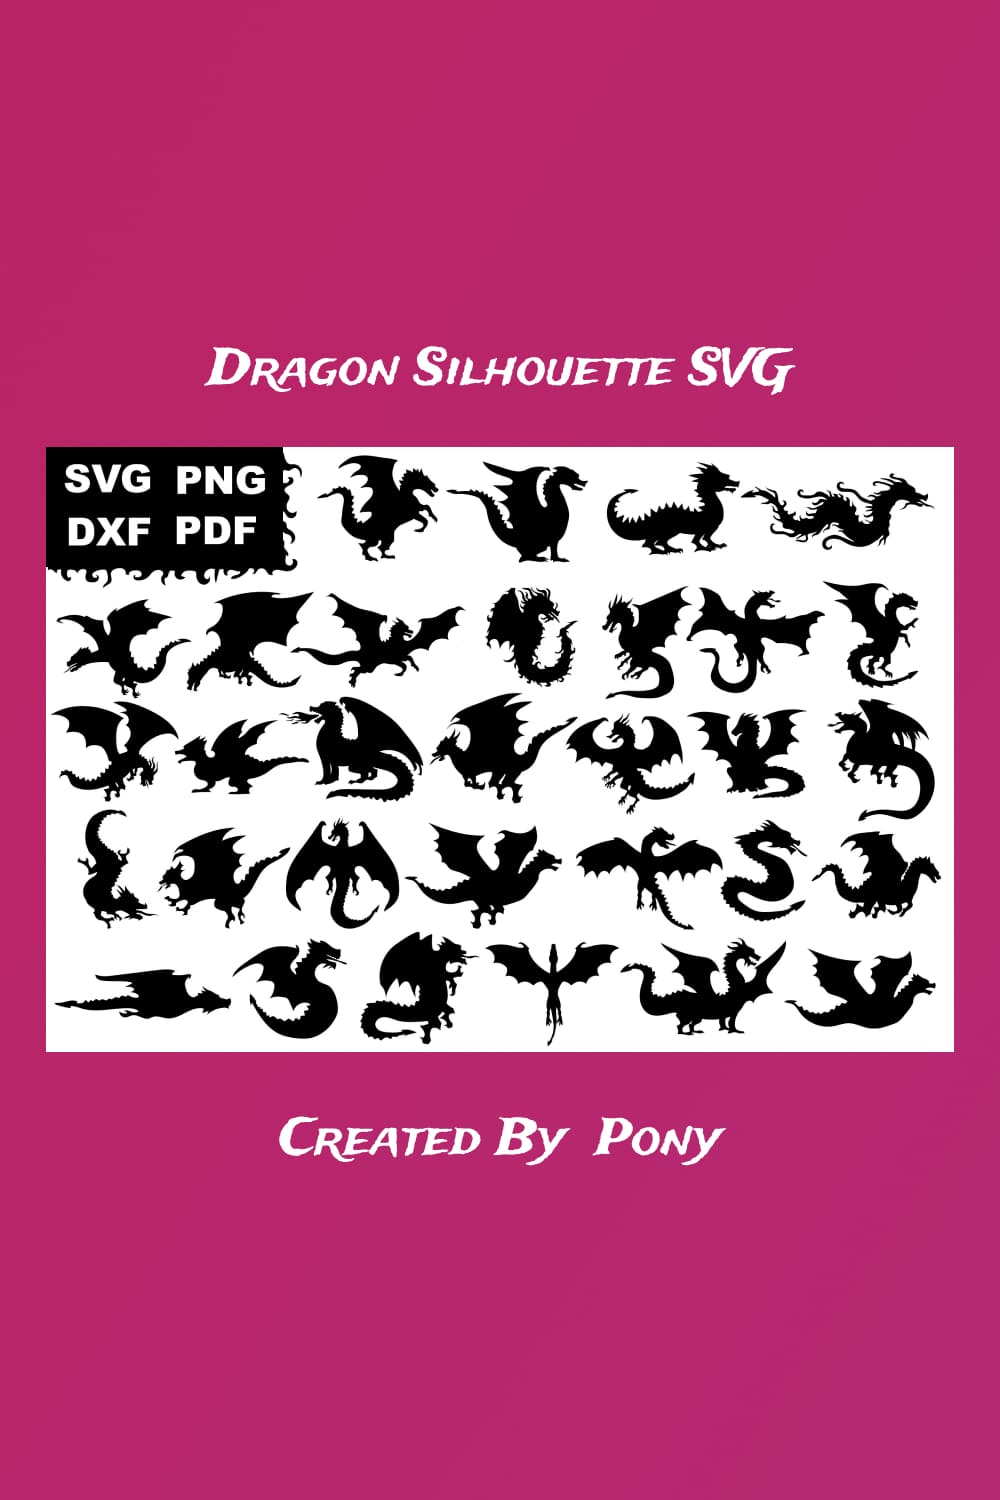 dragon silhouette svg pinterest image.